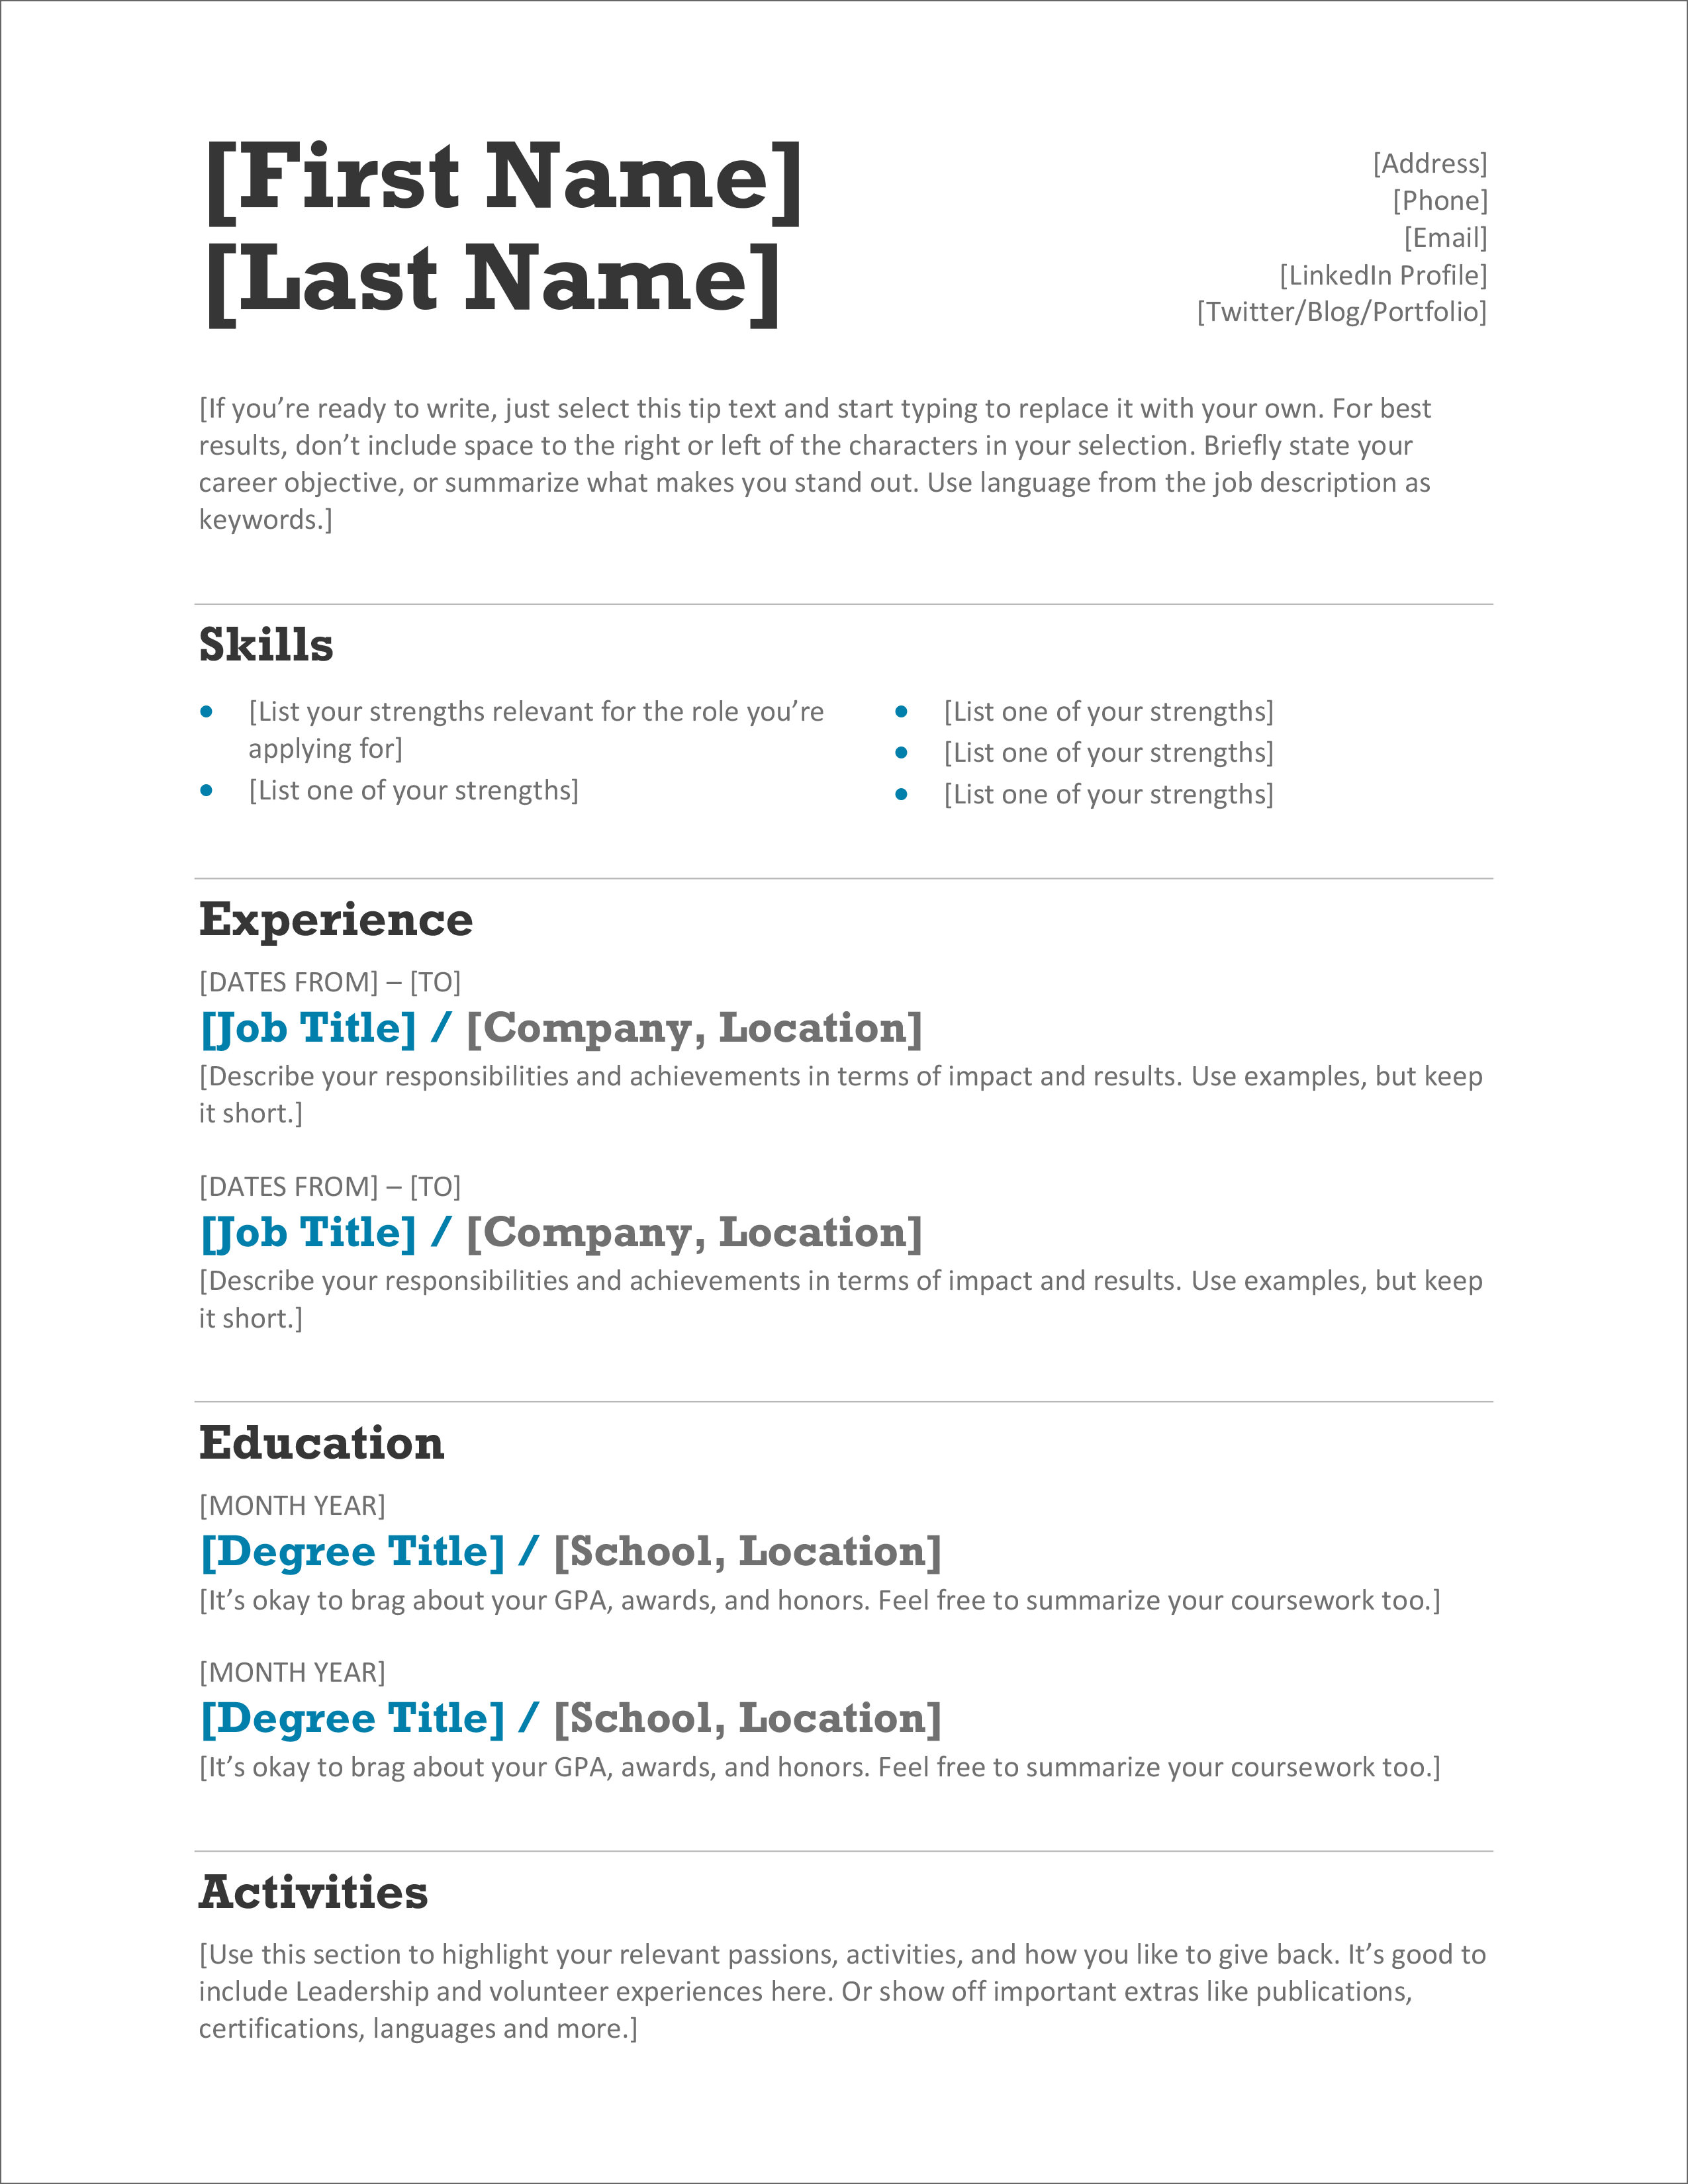 45 Free Modern Resume / Cv Templates - Minimalist, Simple & Clean Design